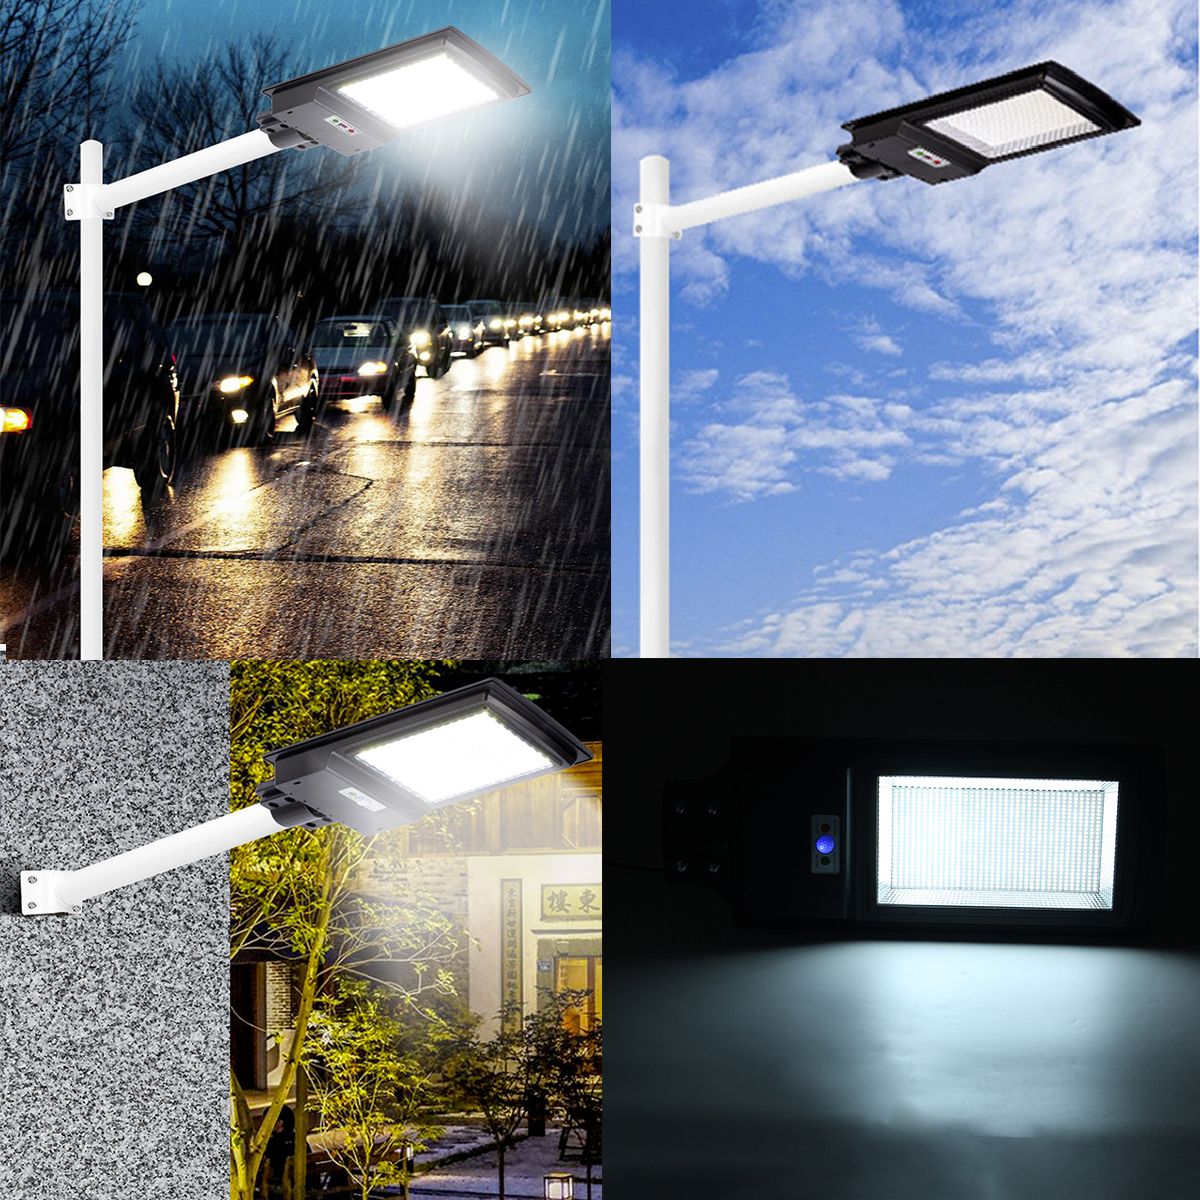 936-LED-Solar-Street-Light-PIR-Motion-Sensor-Lamp-Display-Remote-1618779